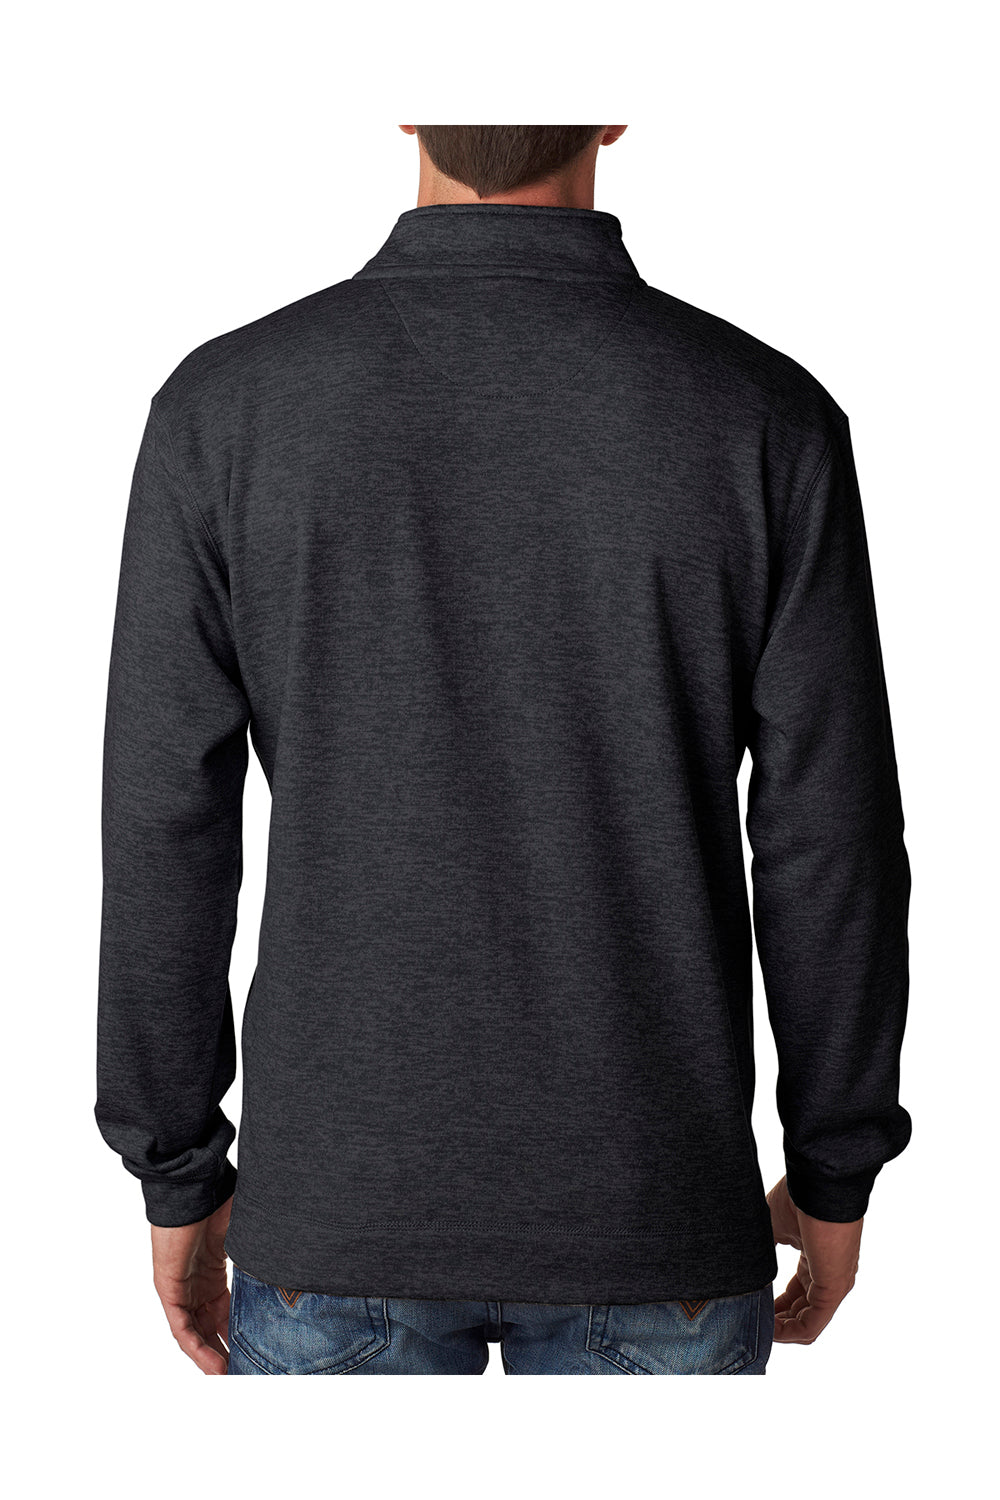 J America JA8614 Mens Cosmic Fleece 1/4 Zip Sweatshirt Onyx Black Back